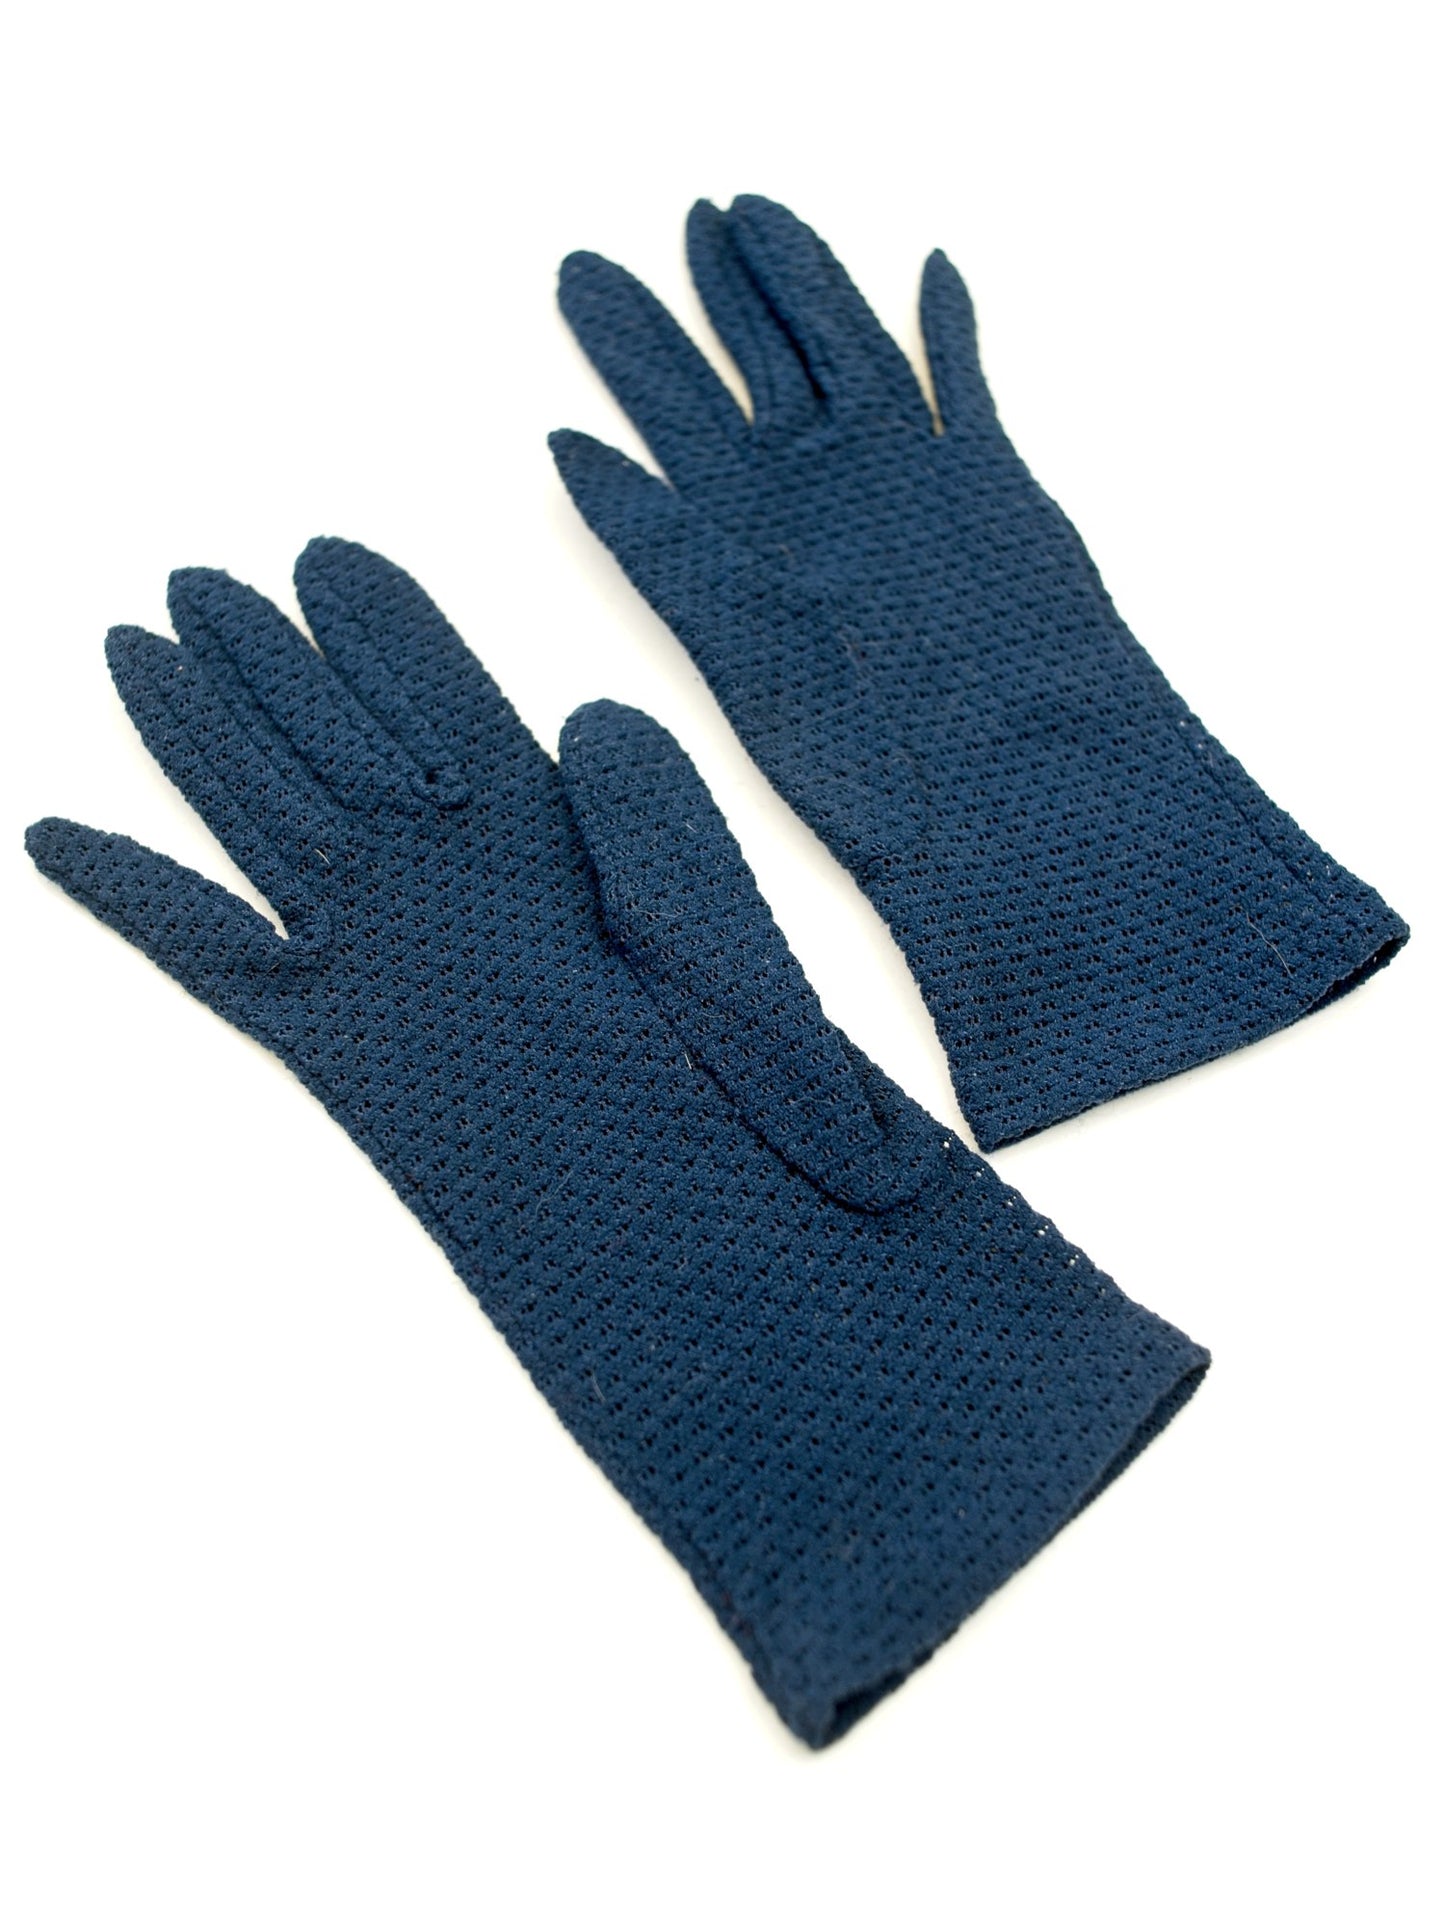 Vintage Blue Stretch Fish Net Day Gloves